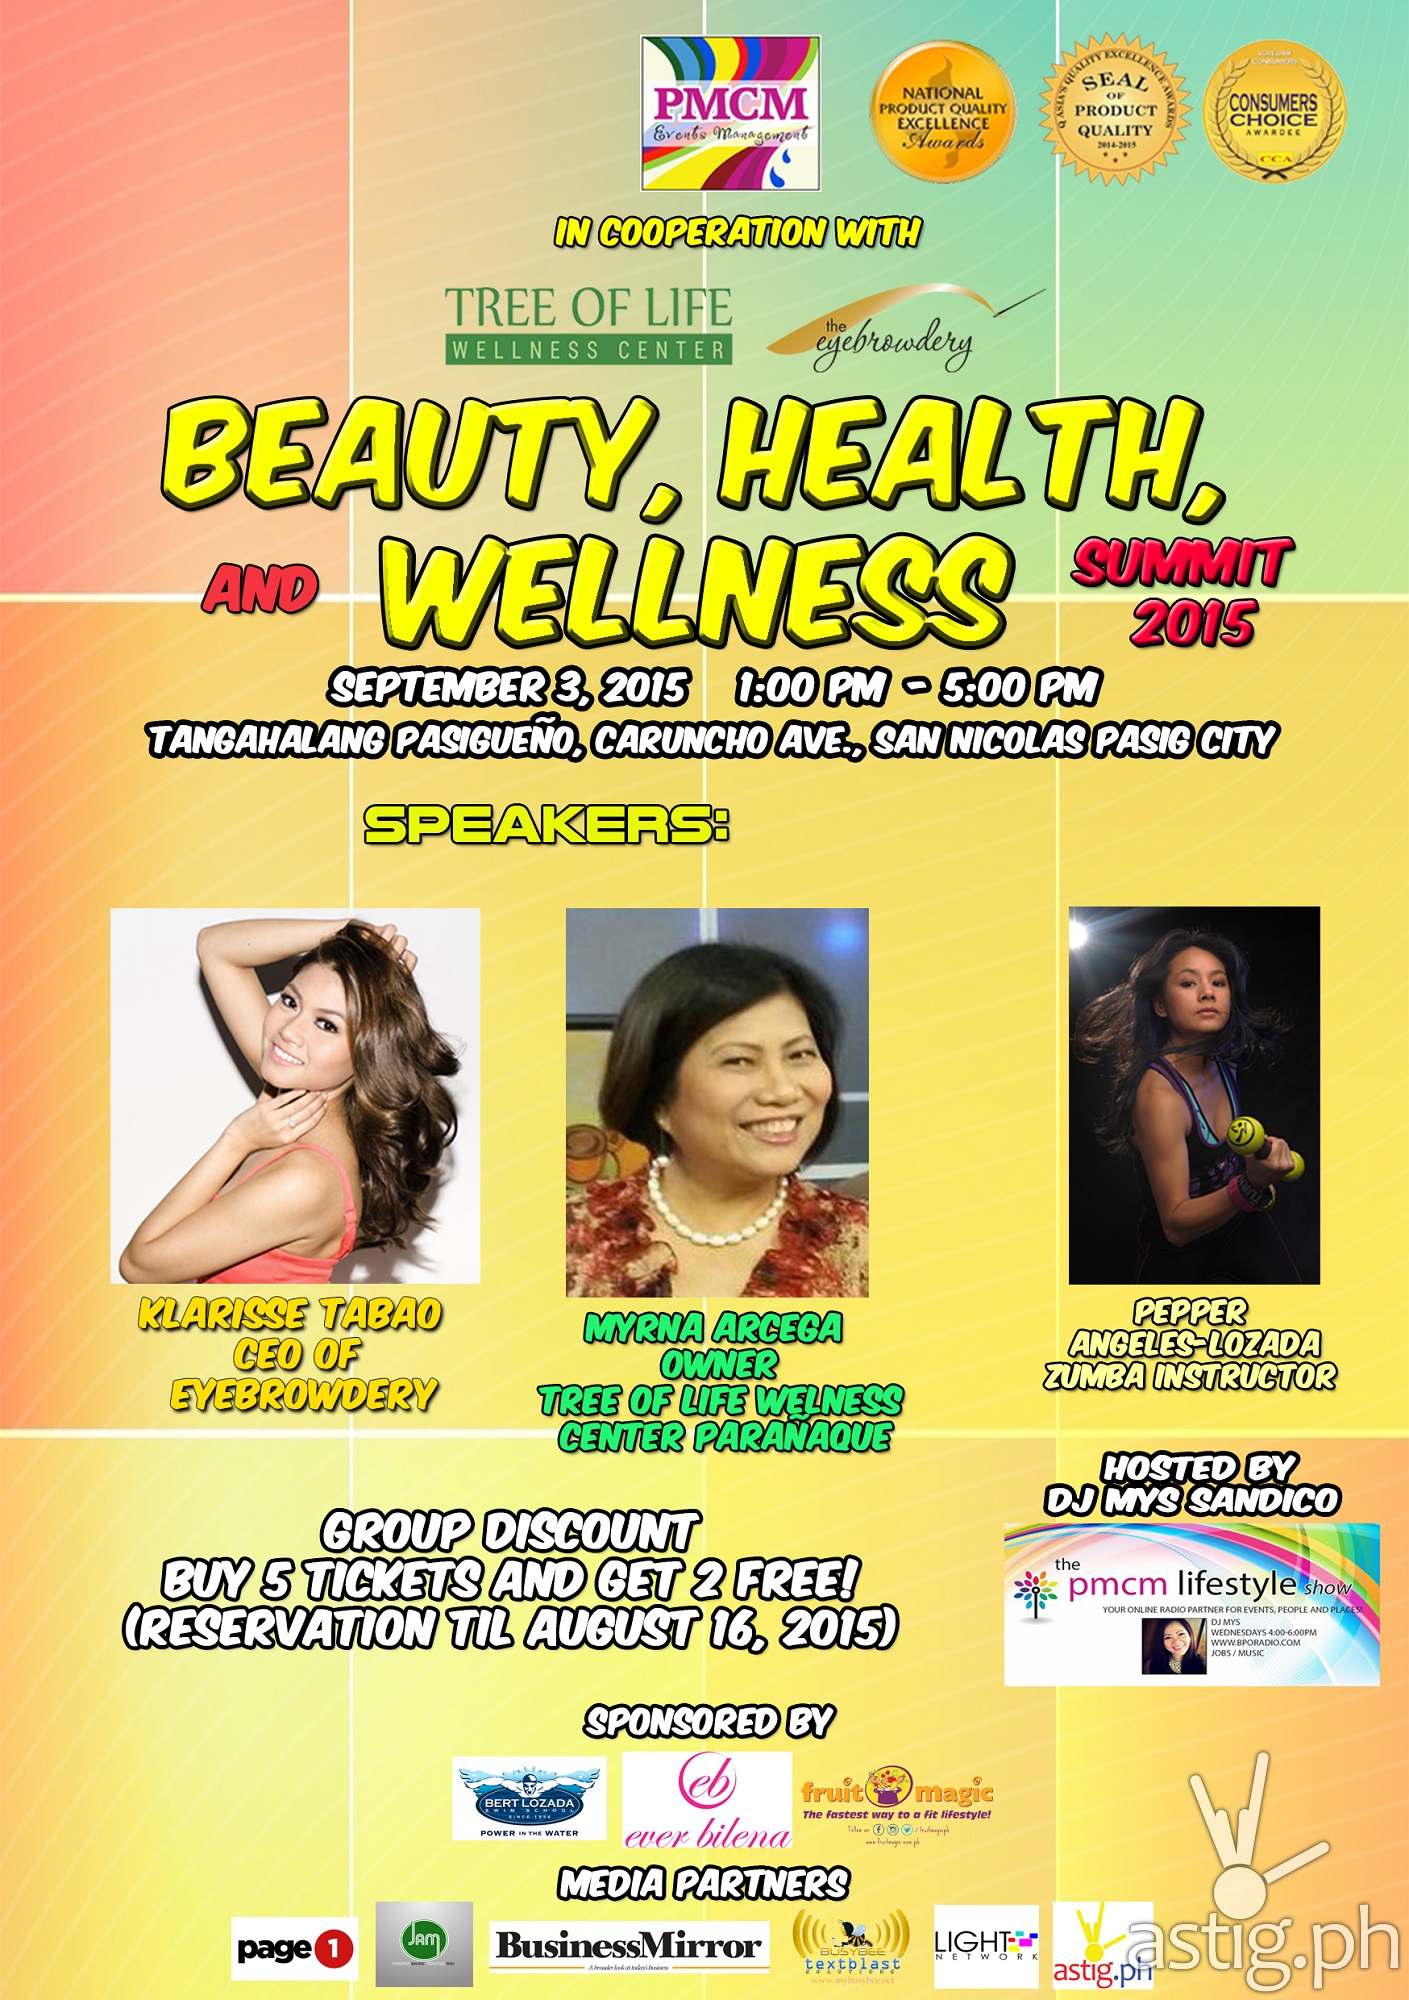 Beauty Health Wellness Tree of Life PMCM